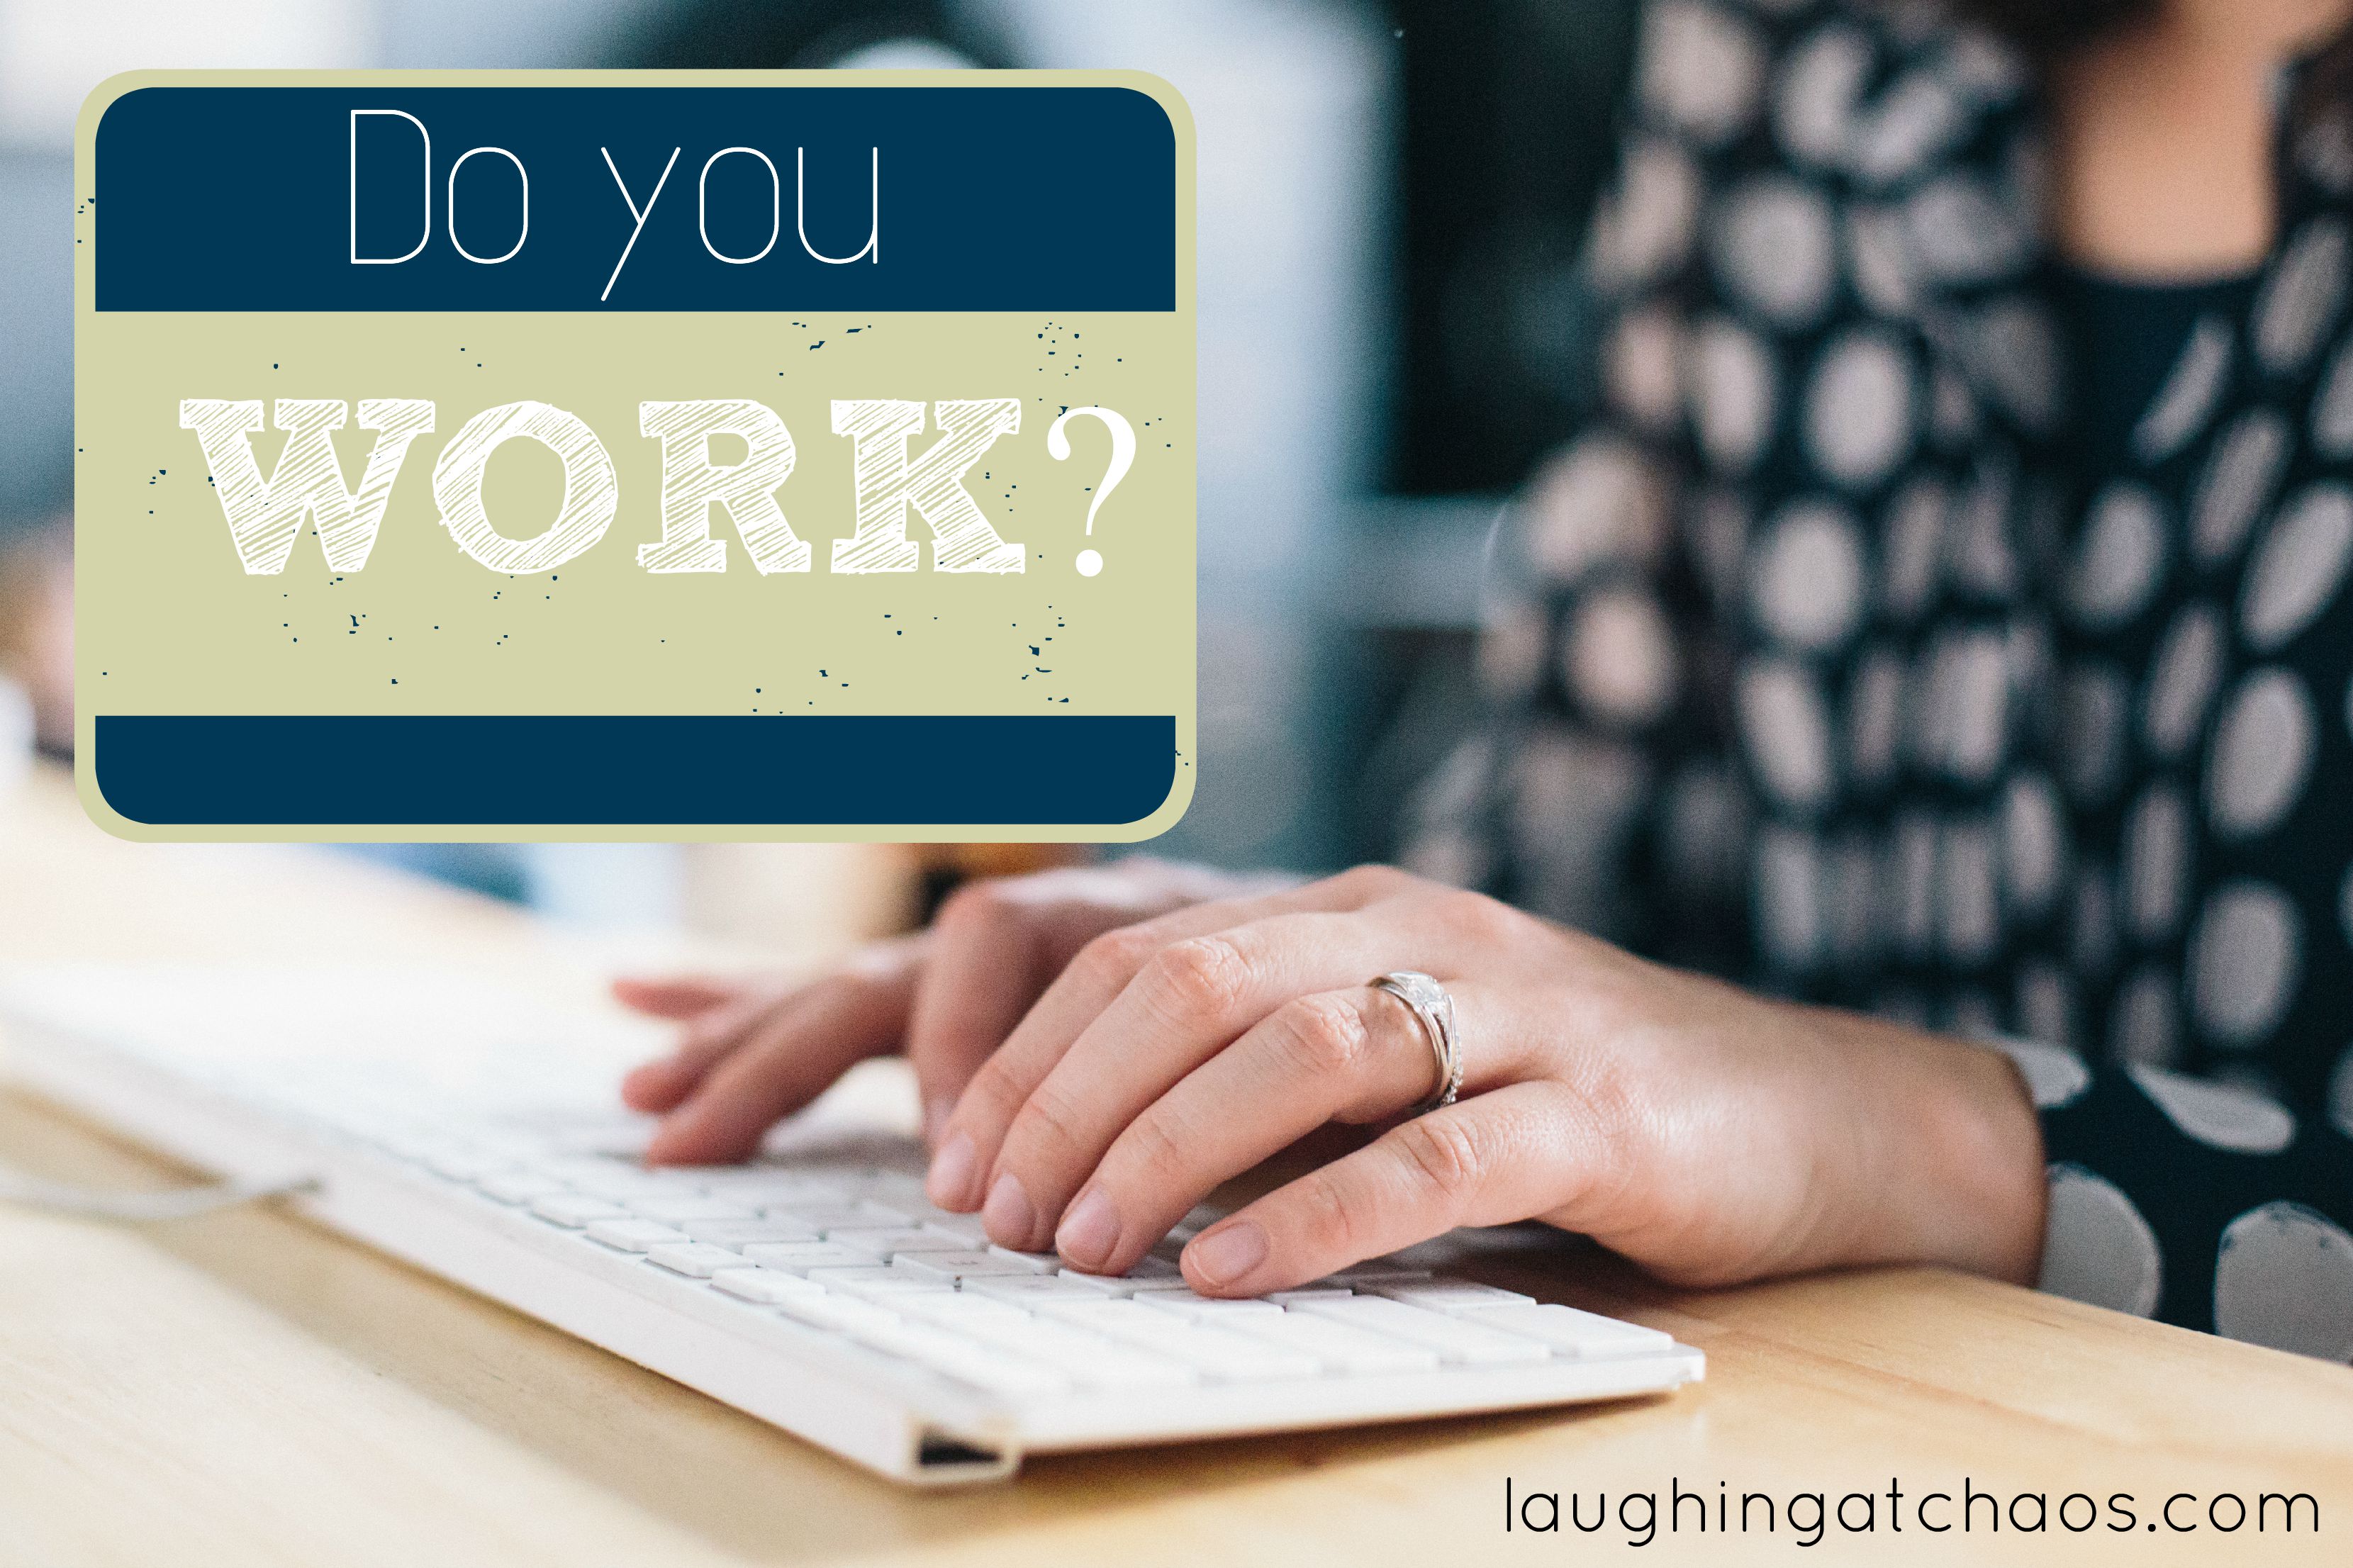 Do you work?